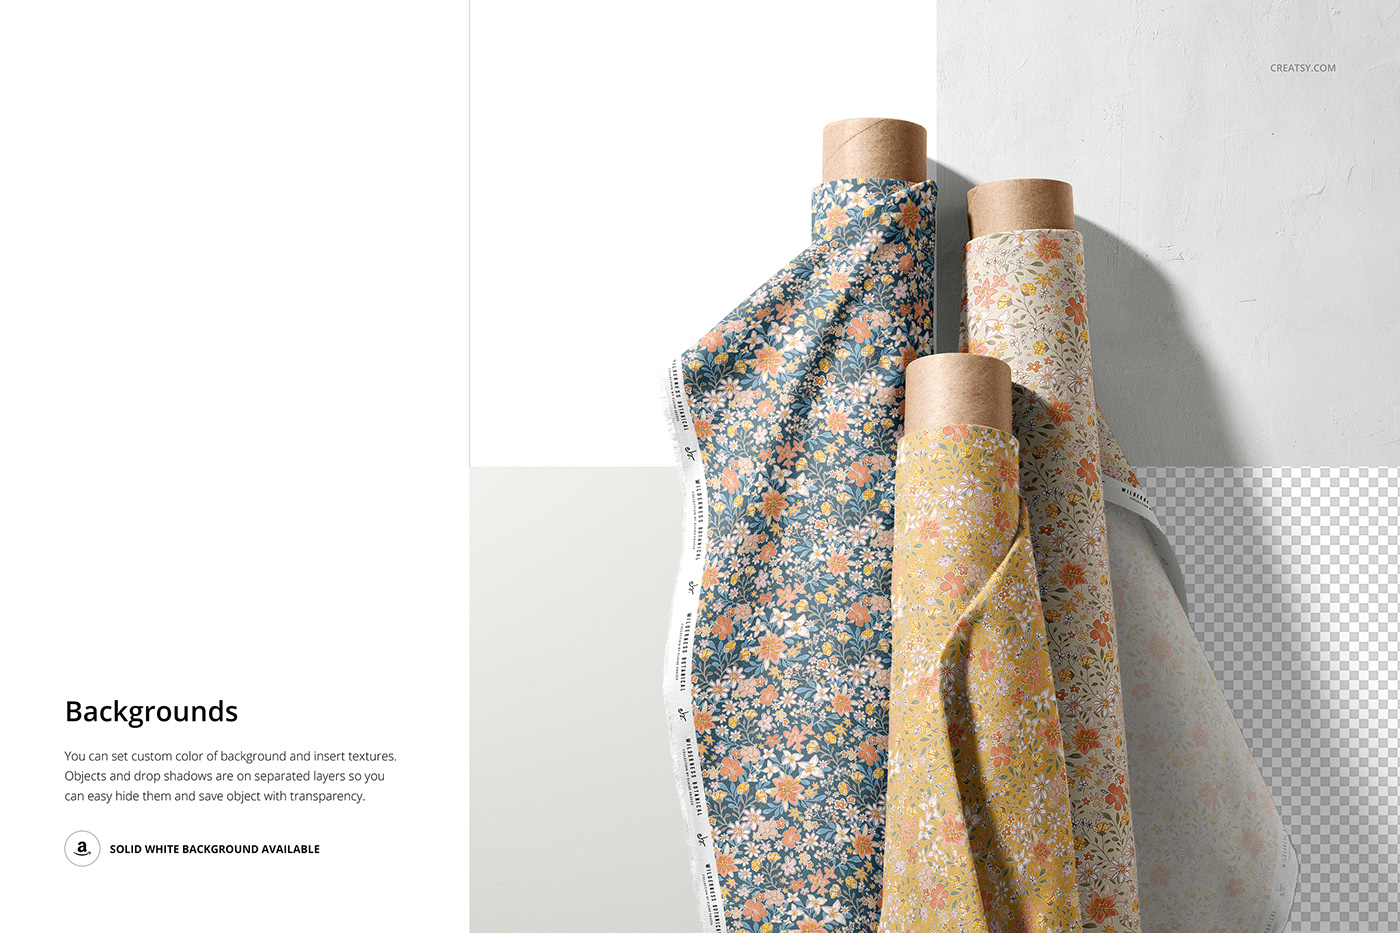 closeup cotton creatsy fabric fabrics mock-up Mockup mockups sewing template